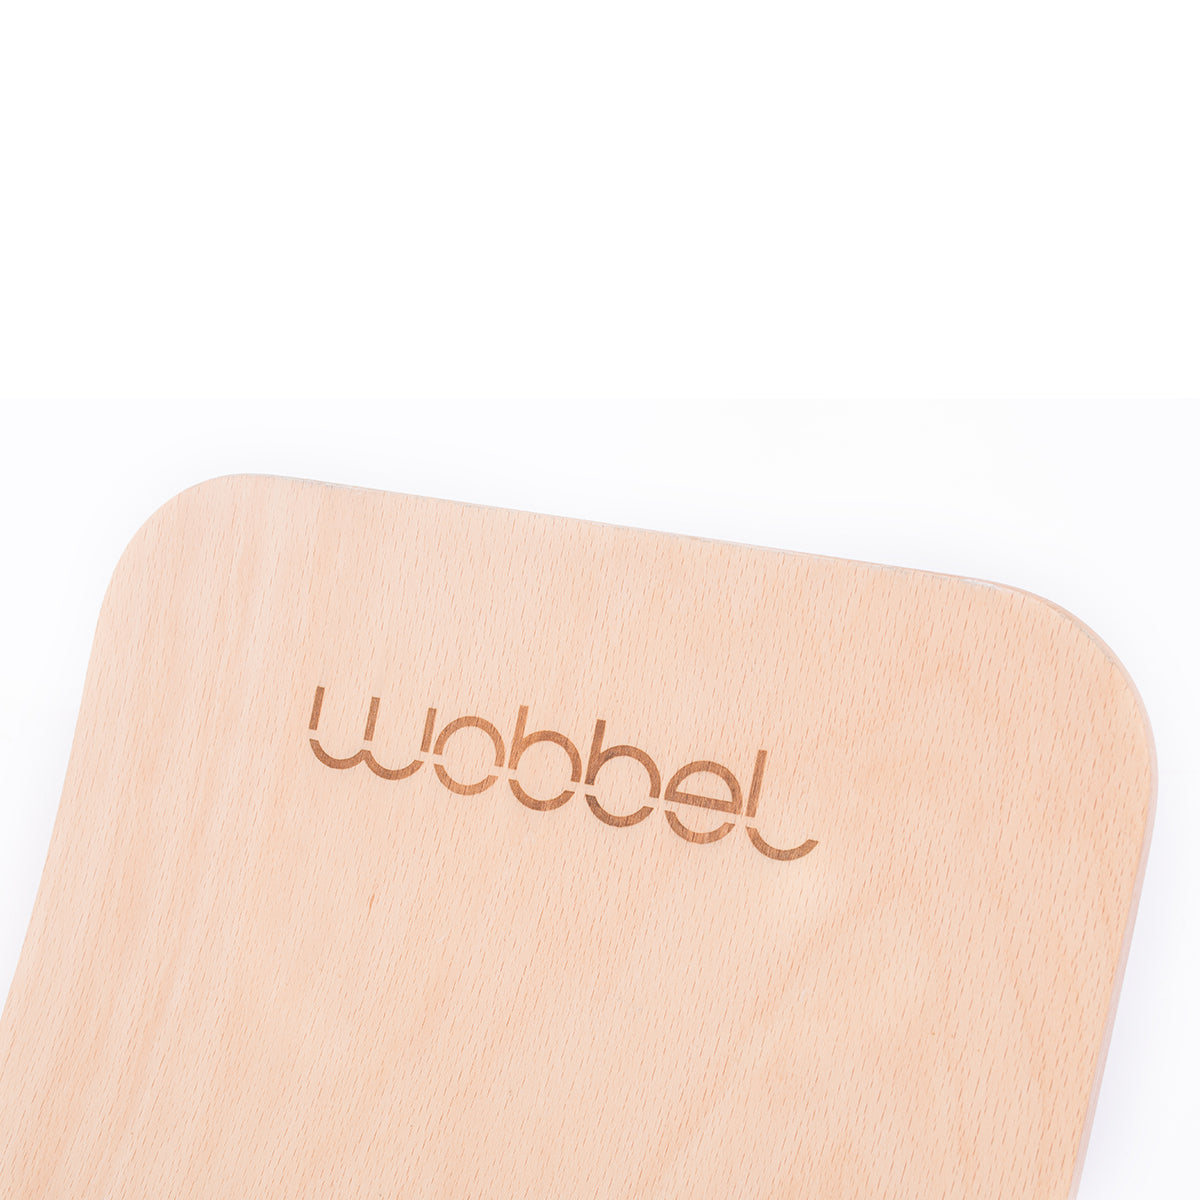 Wobbel Original Transparent Lacquer Balance Board - Natural/Wild Rose Wool Felt